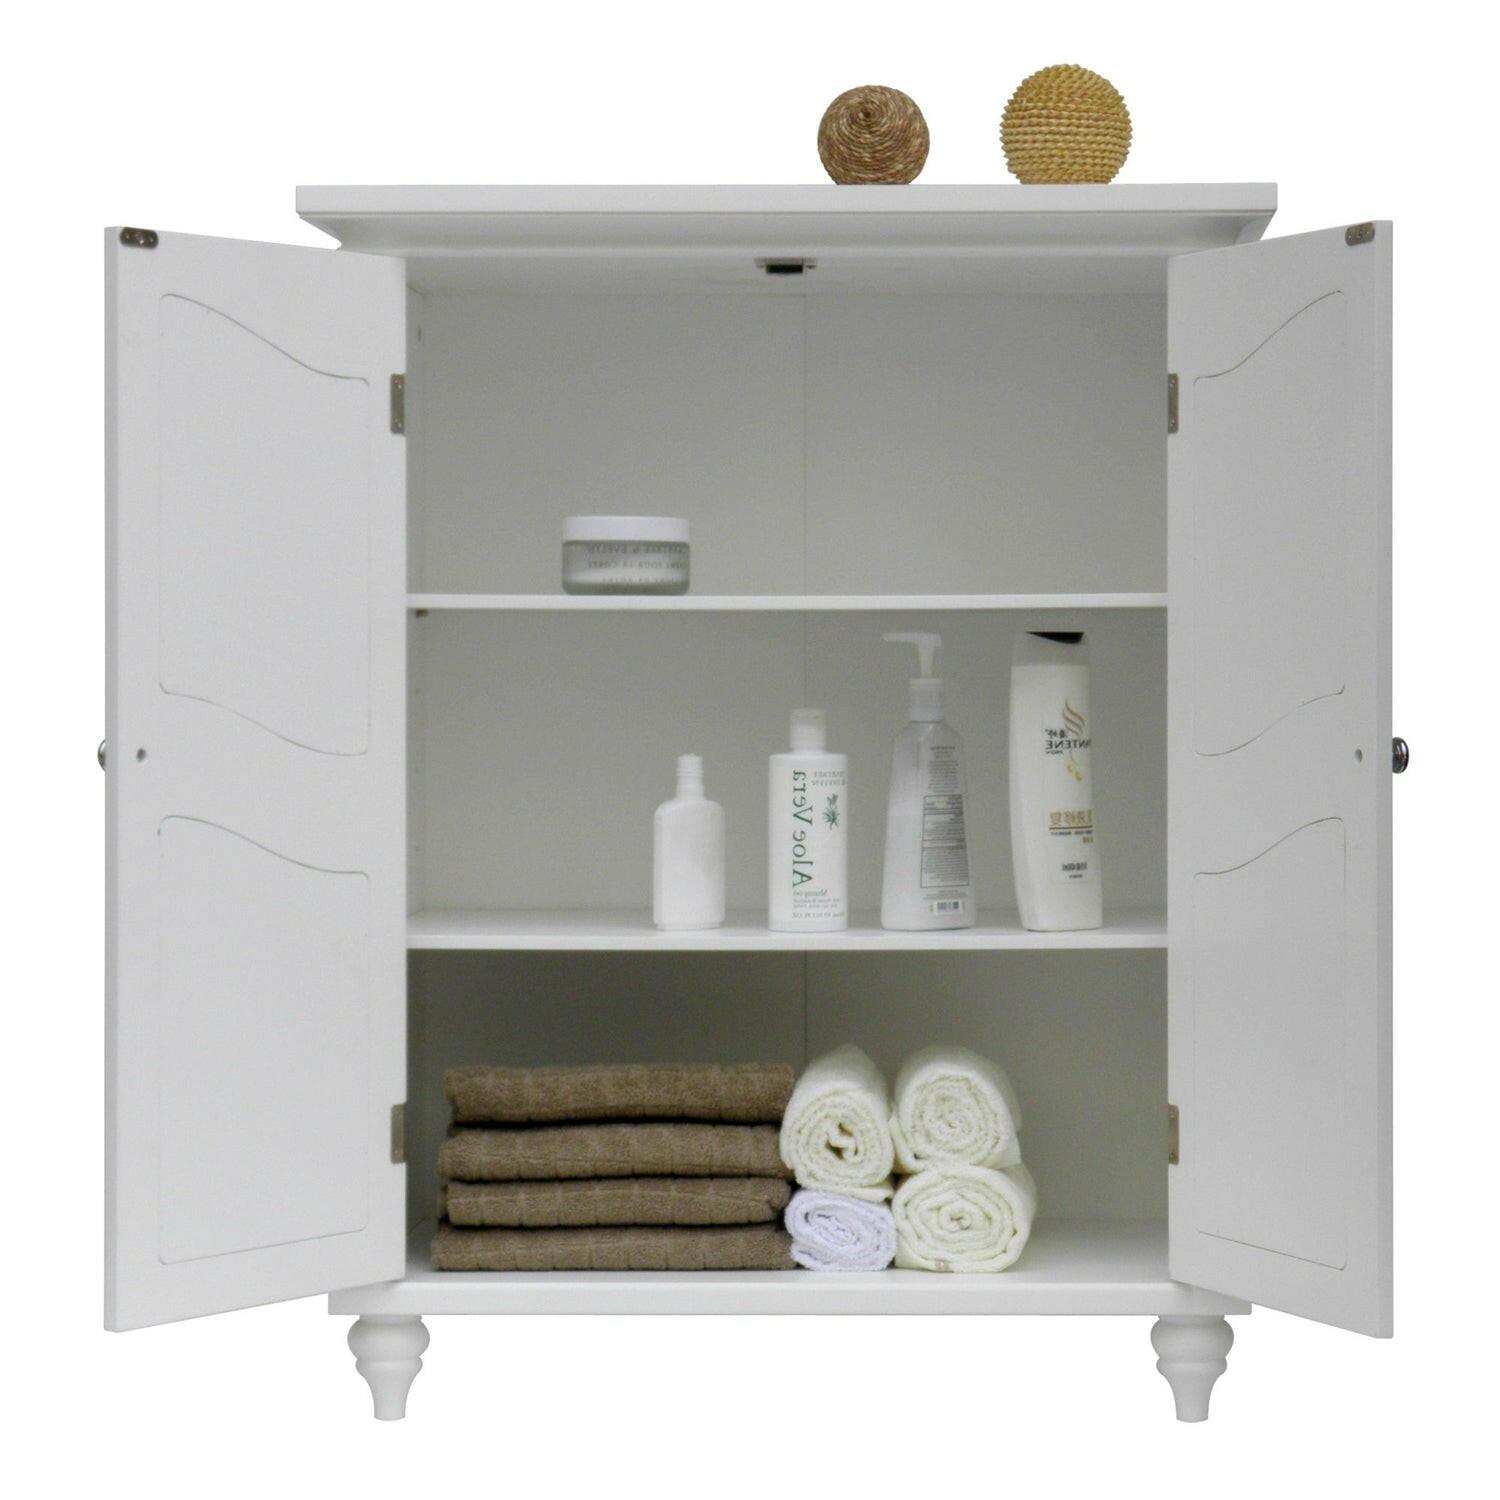 Bathroom Linen Storage Floor Cabinet with 2-Doors in White Wood Finish - FurniFindUSA